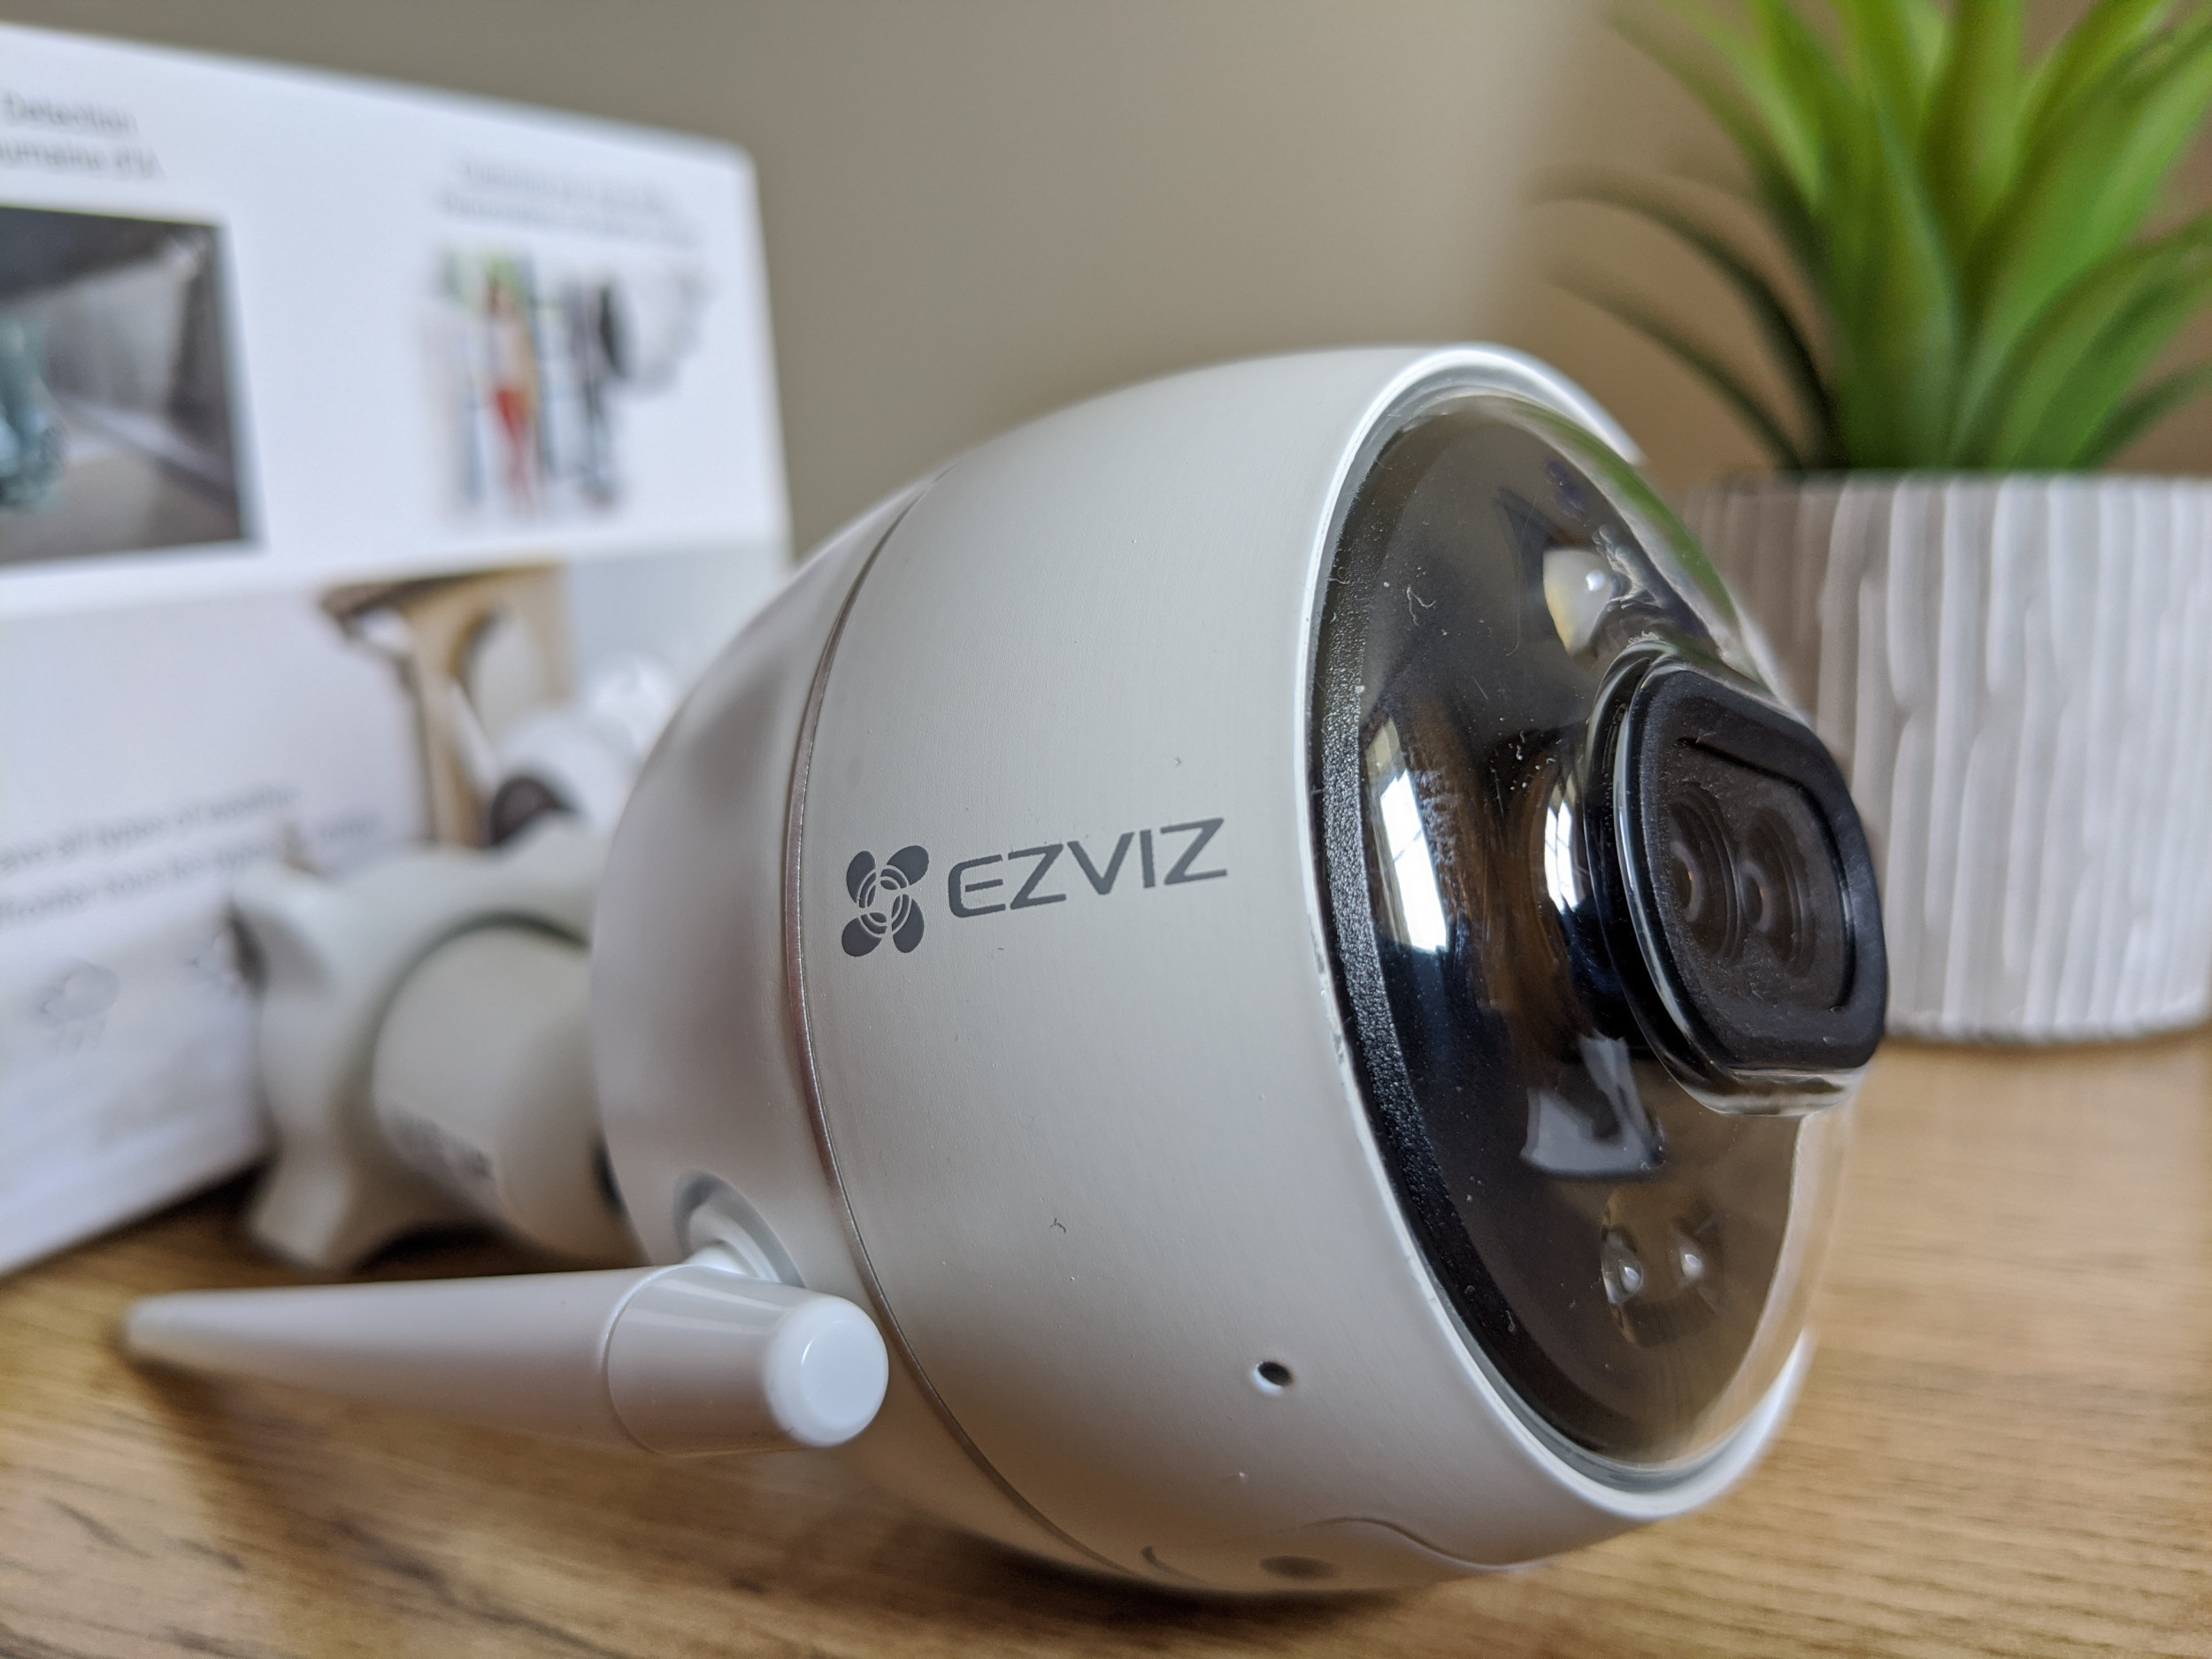 Review: Ezviz C3X Outdoor Smart Wi-Fi Surveillance Camera